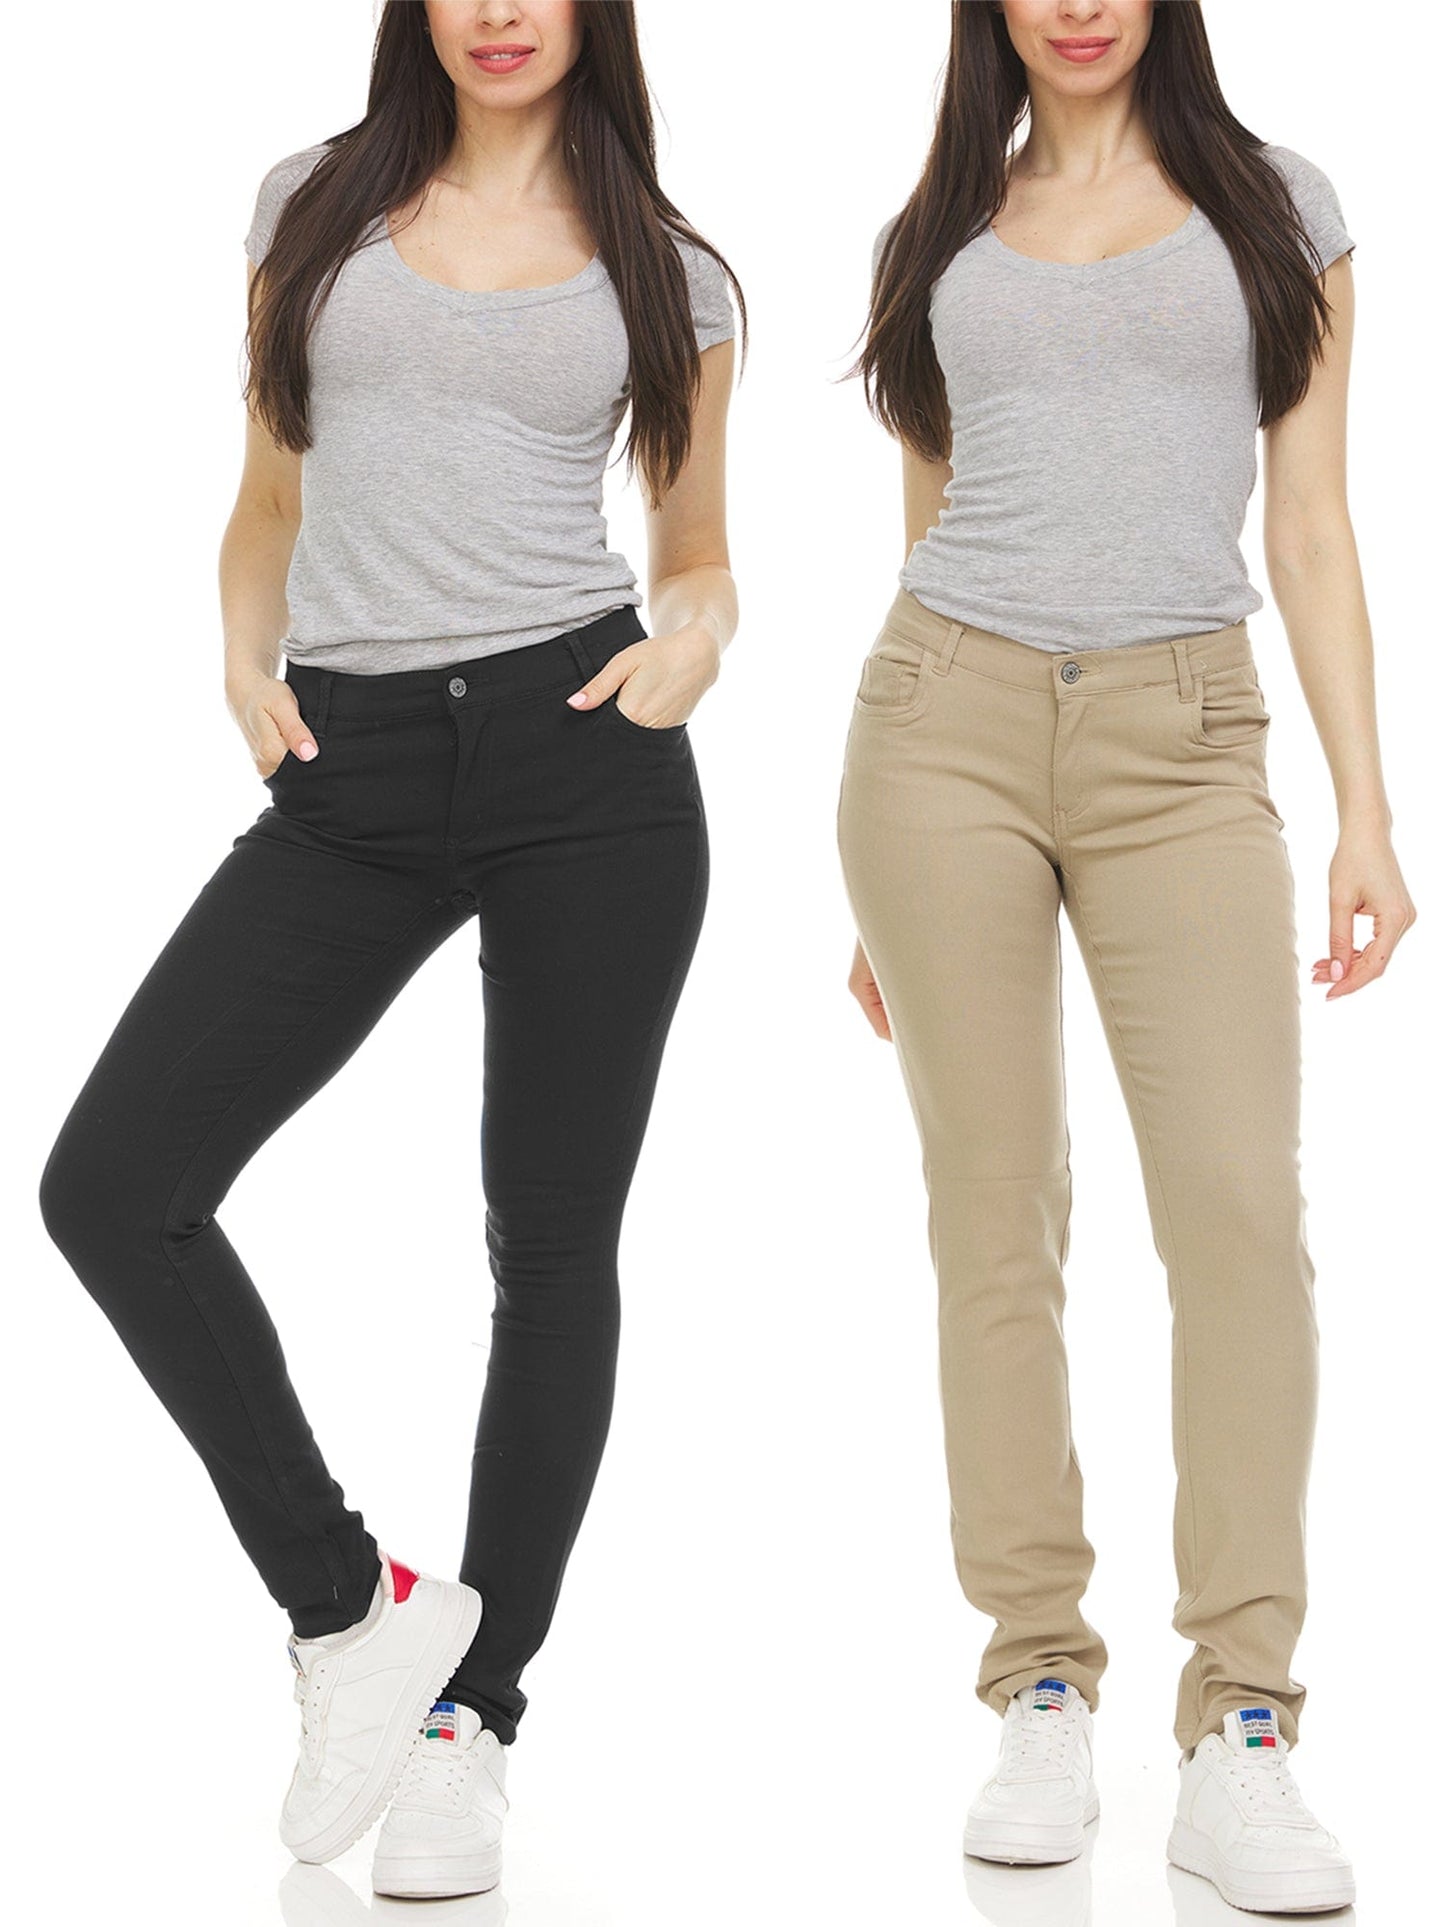 Women's Super Stretchy Skinny 5-Pocket Uniform Soft Chino Pants - GalaxybyHarvic